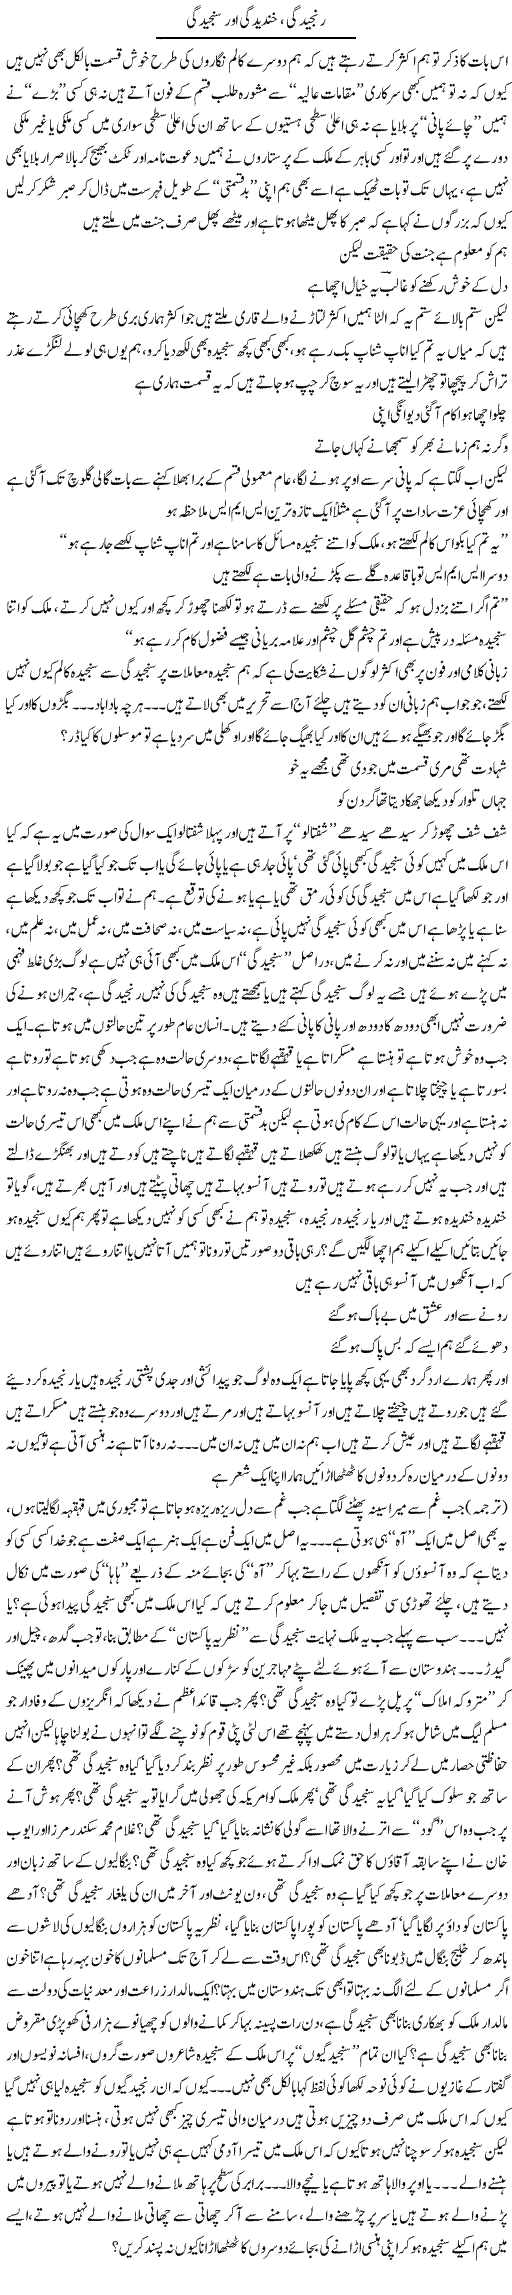 Ranjedgi Khandidgi Our Sanjidgi | Saad Ullah Jan Barq | Daily Urdu Columns